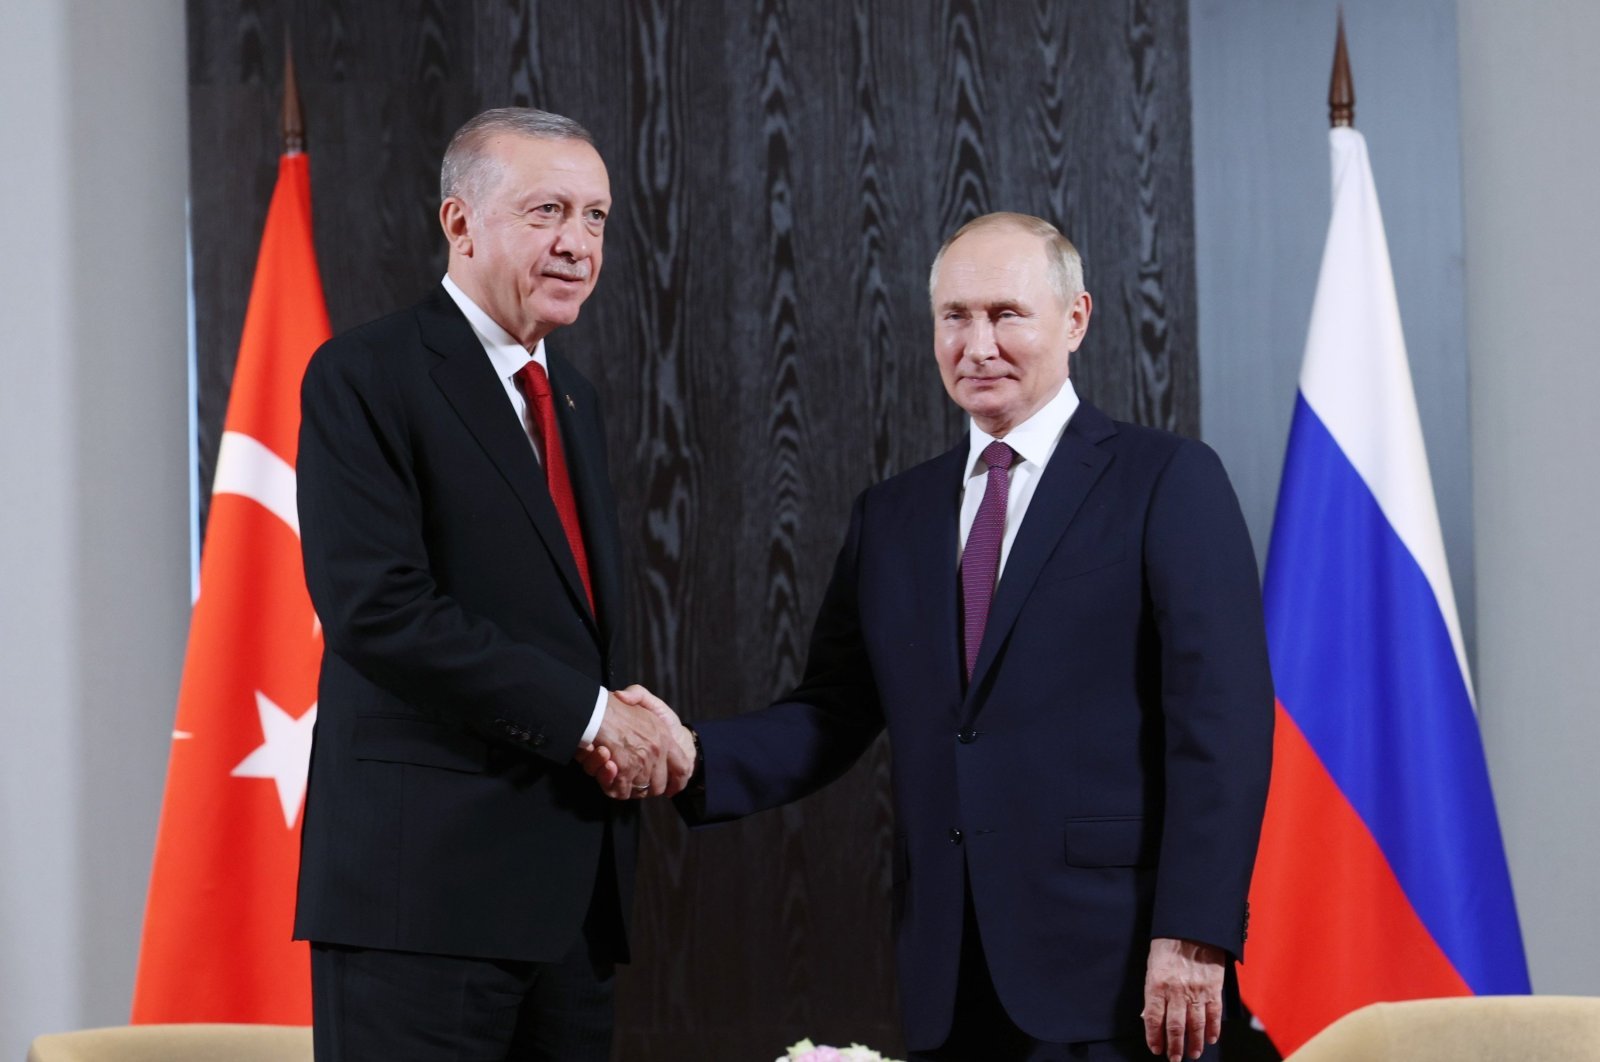 Meeting between Presidents Erdogan and Putin kicks off